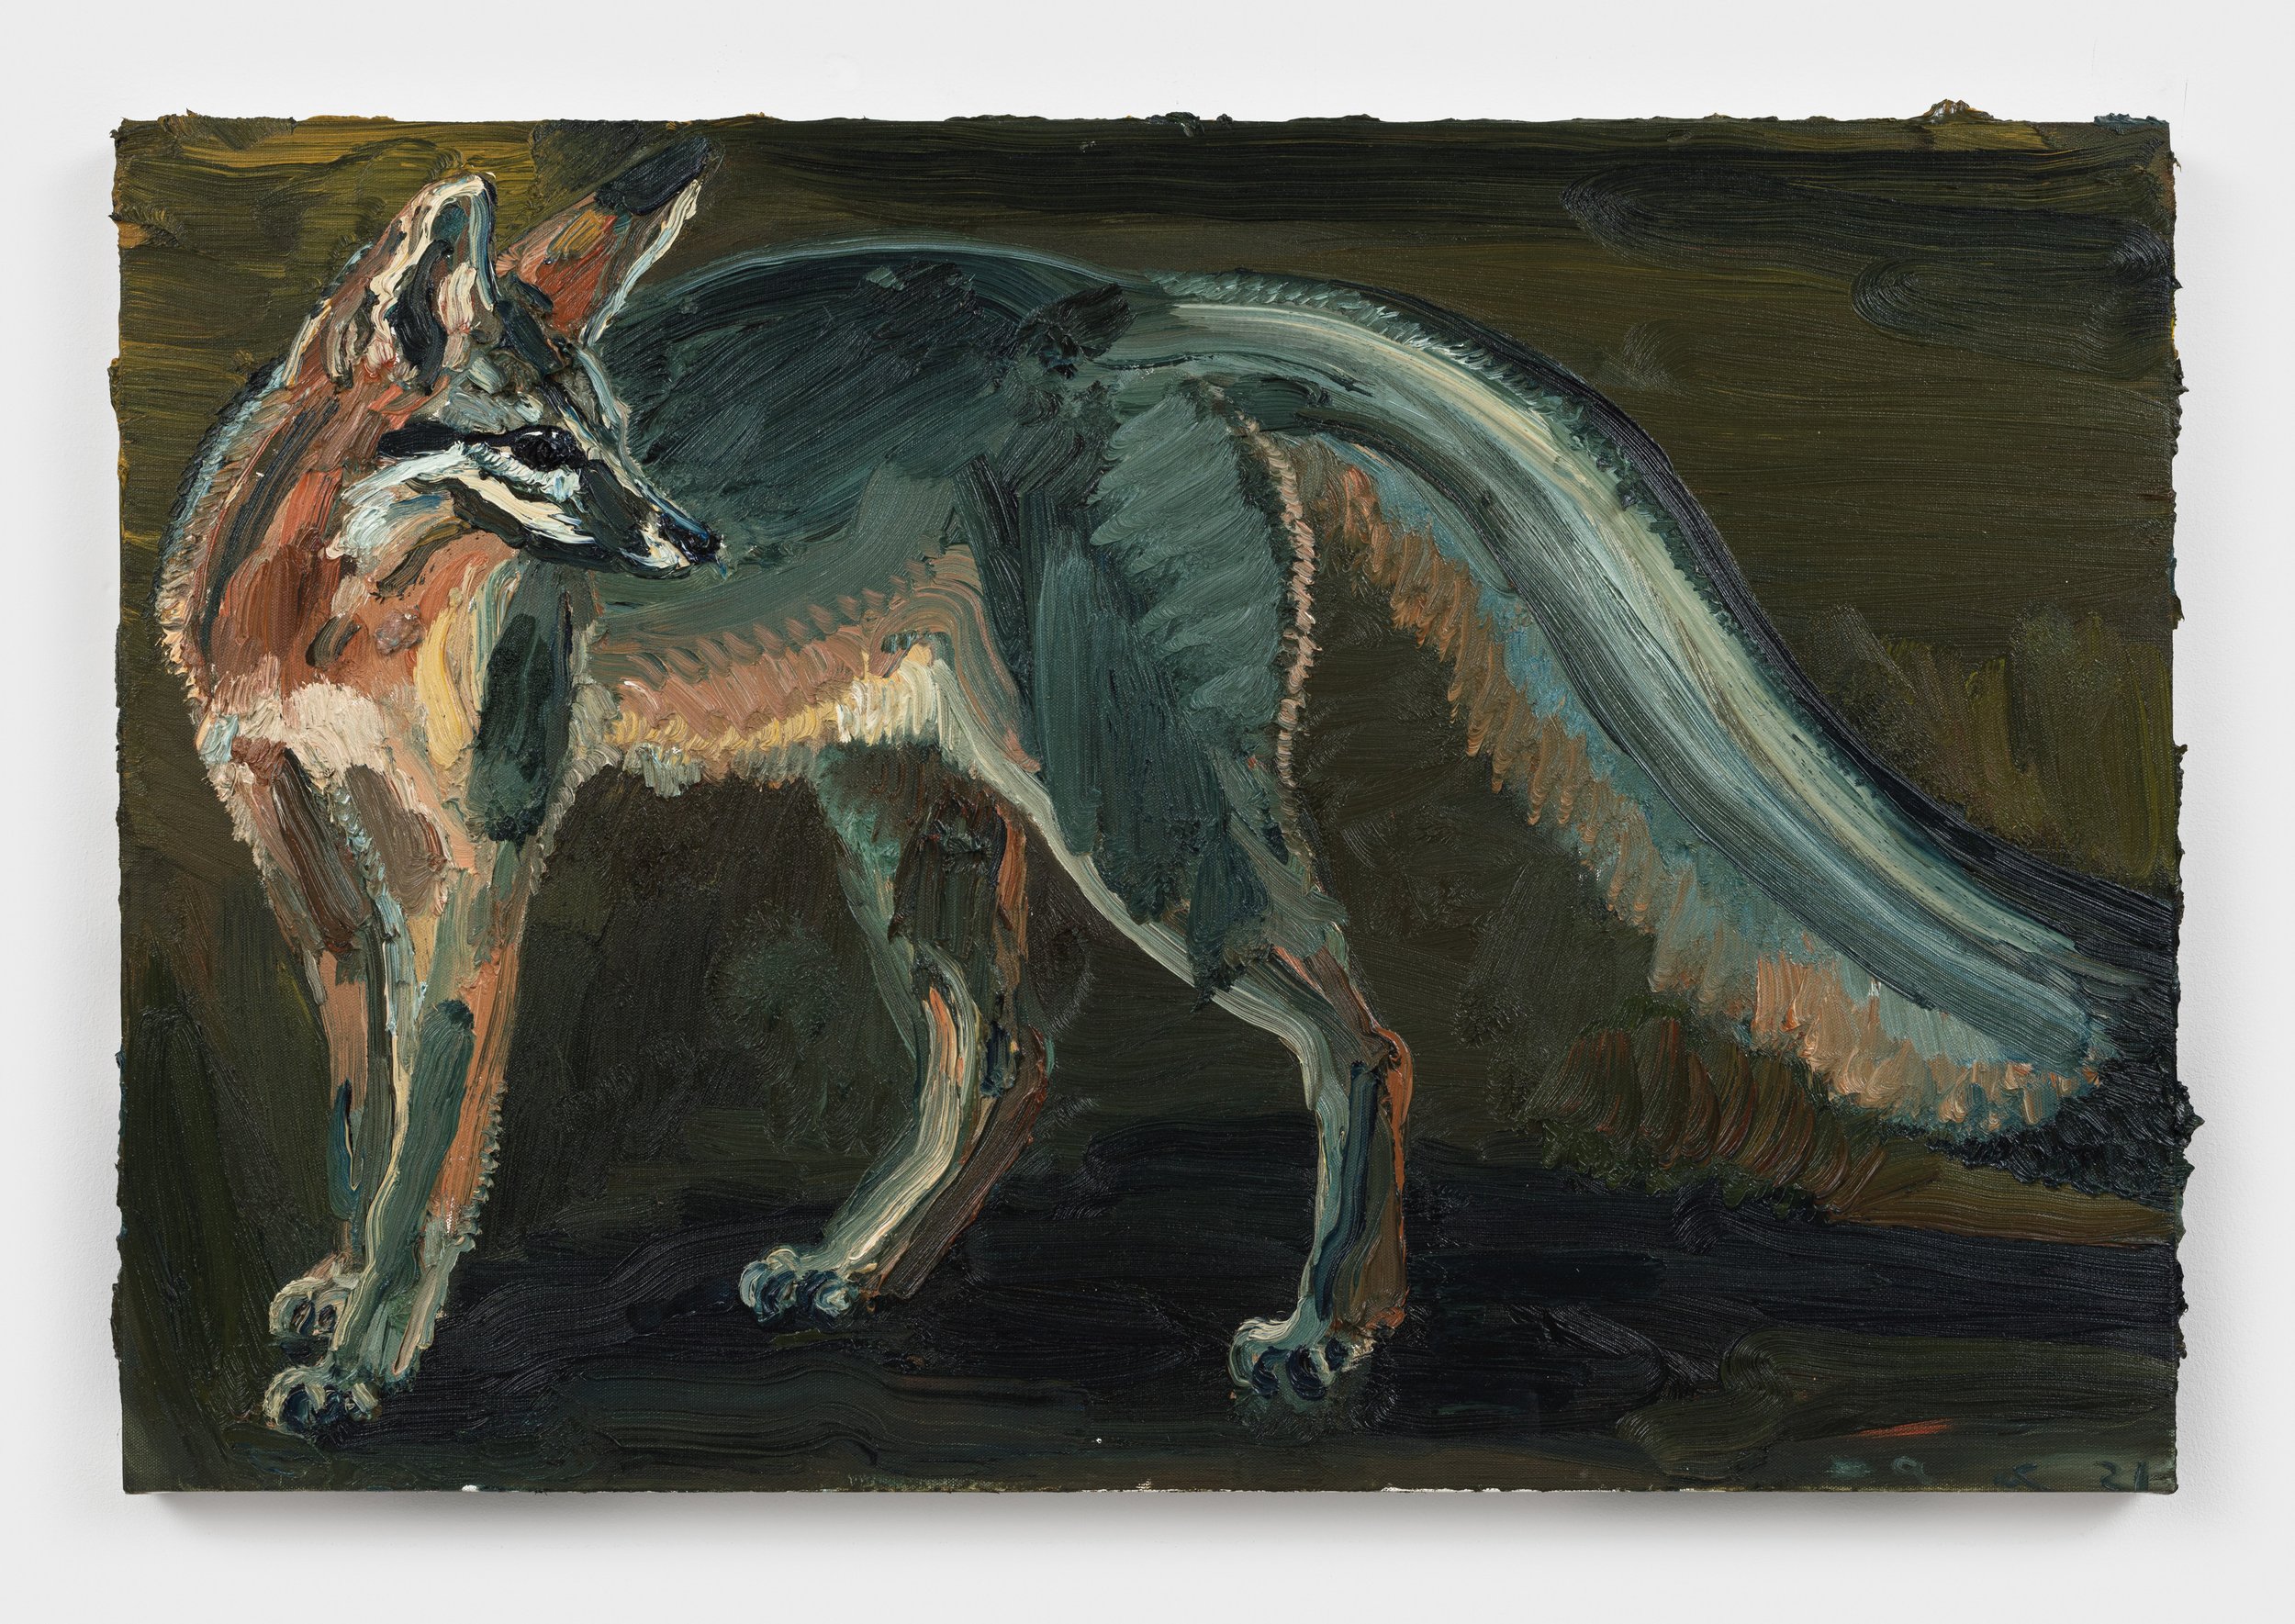  Allison Schulnik  Night Fox #2, 2021  Oil on canvas stretched over board  24 x 36 in. 